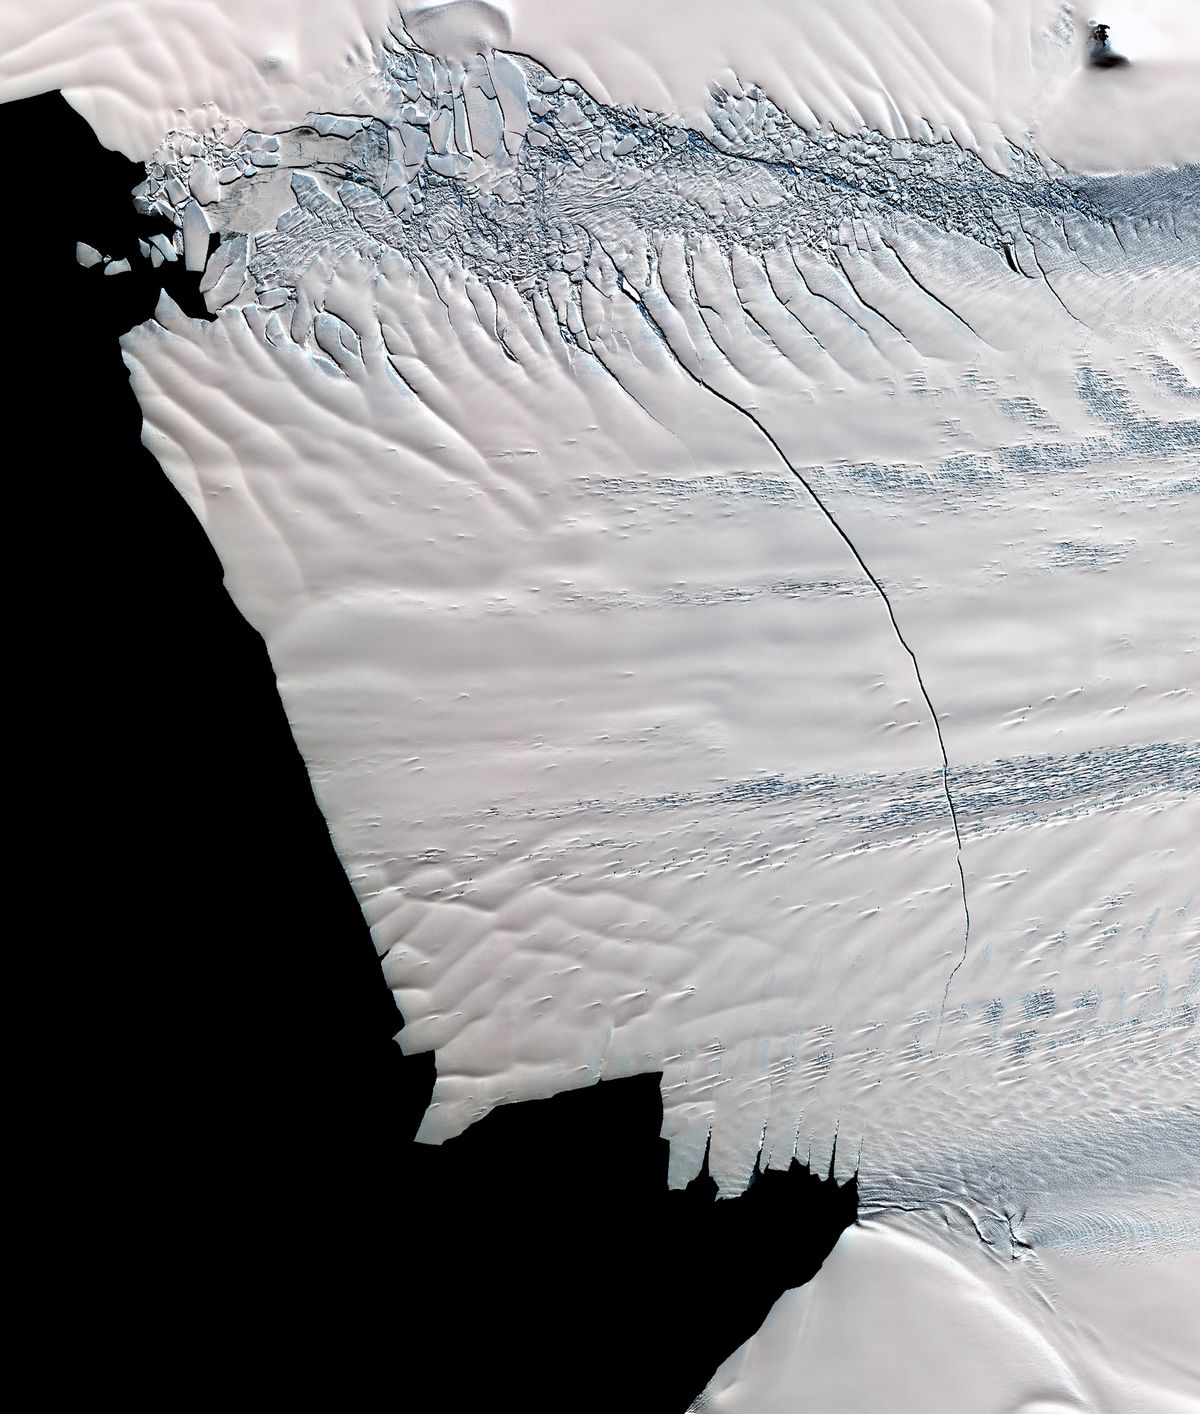 nasa scientists discovered a massive crack across the pine island glacier, antarctica nov 13, 2011